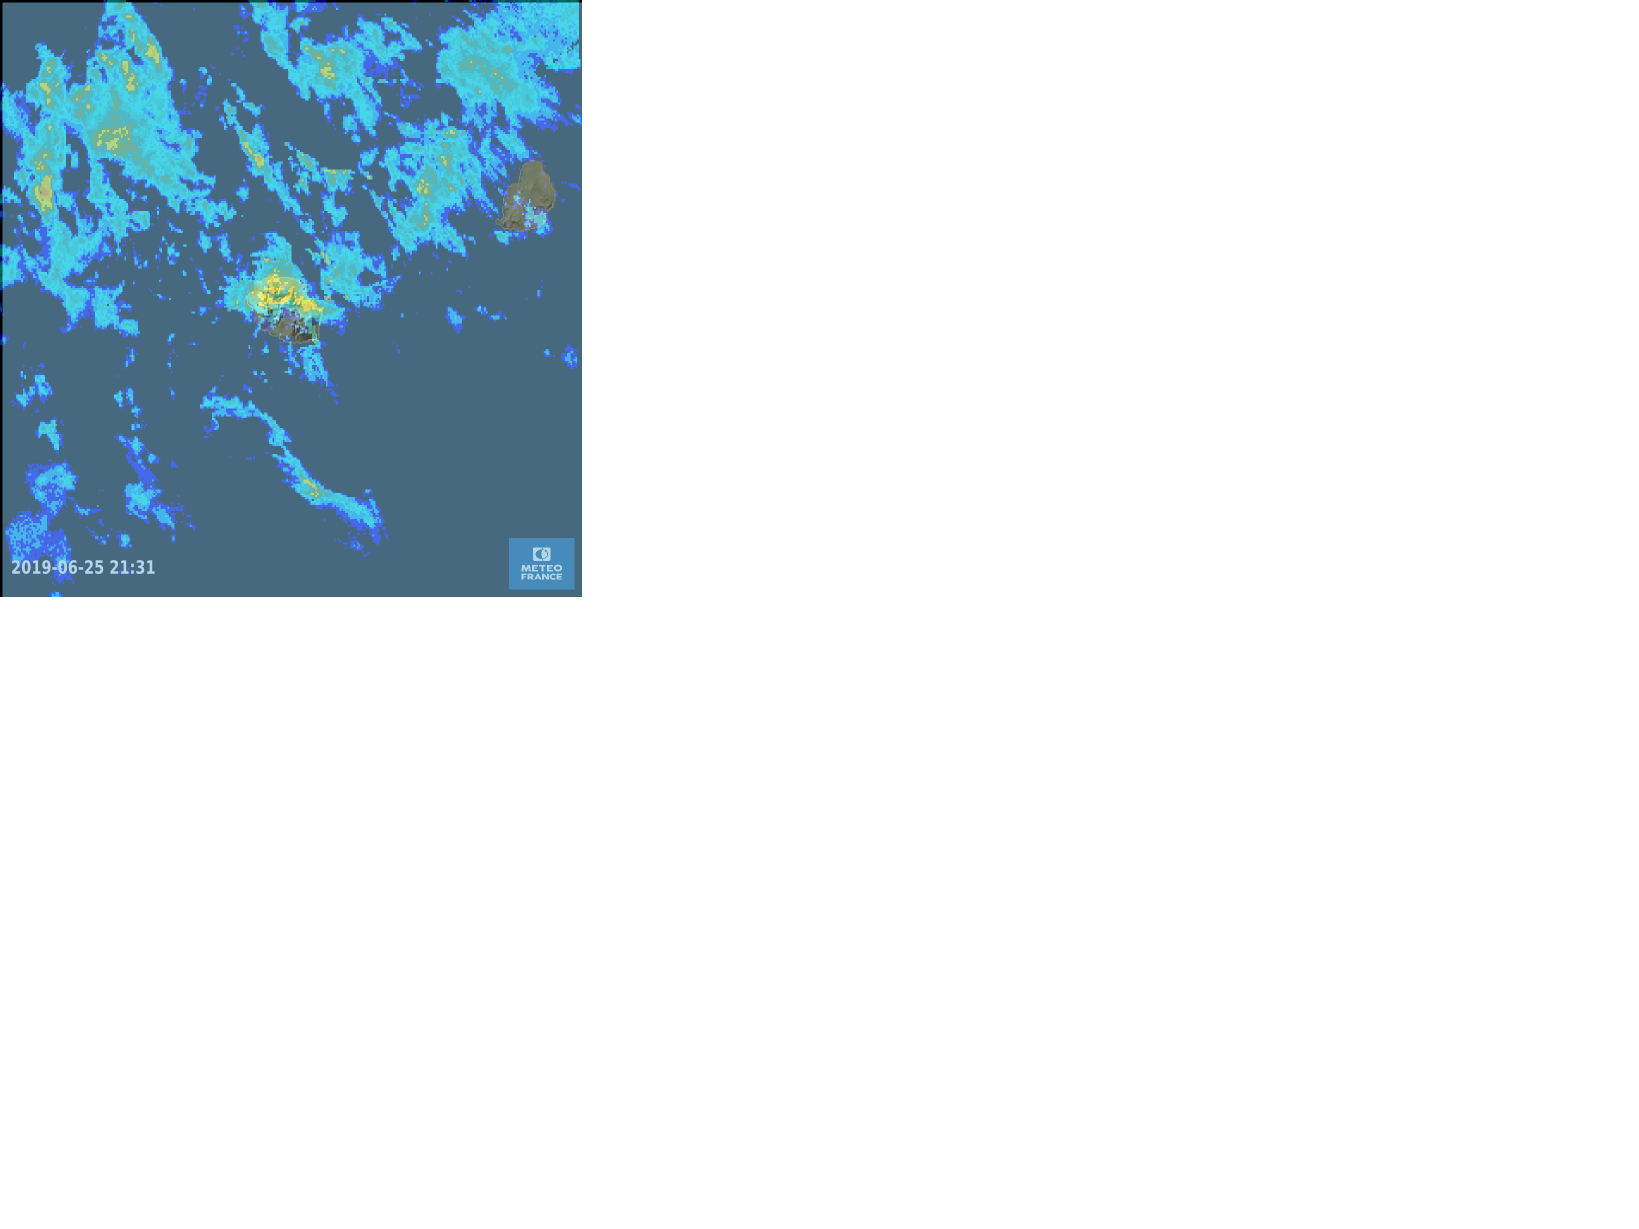 capture radar Meteo france 21H31 le 25.06.19.png, 138.87 Ko, 1639 x 1229